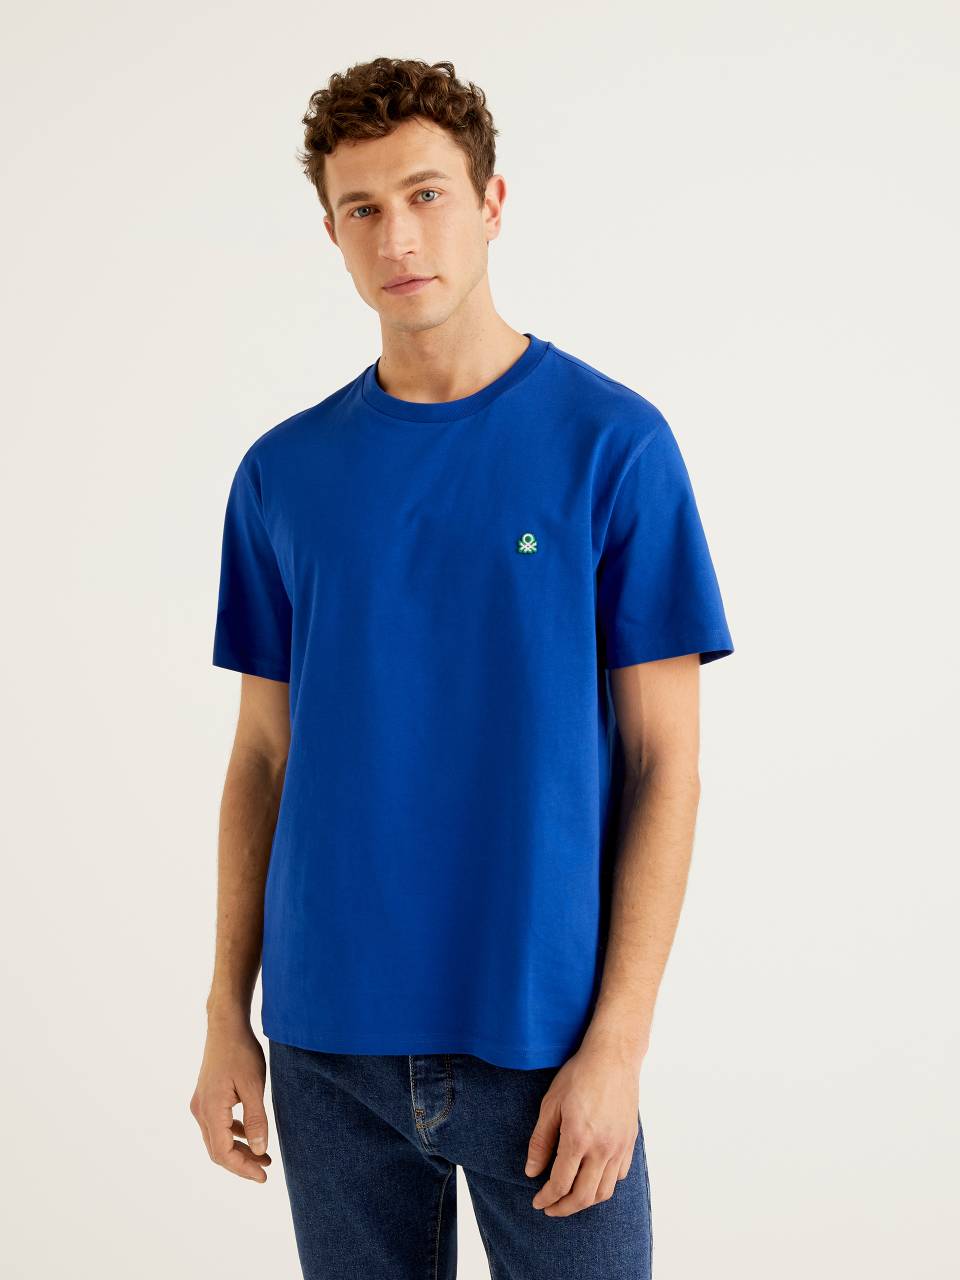 Benetton 100% organic cotton basic t-shirt. 1